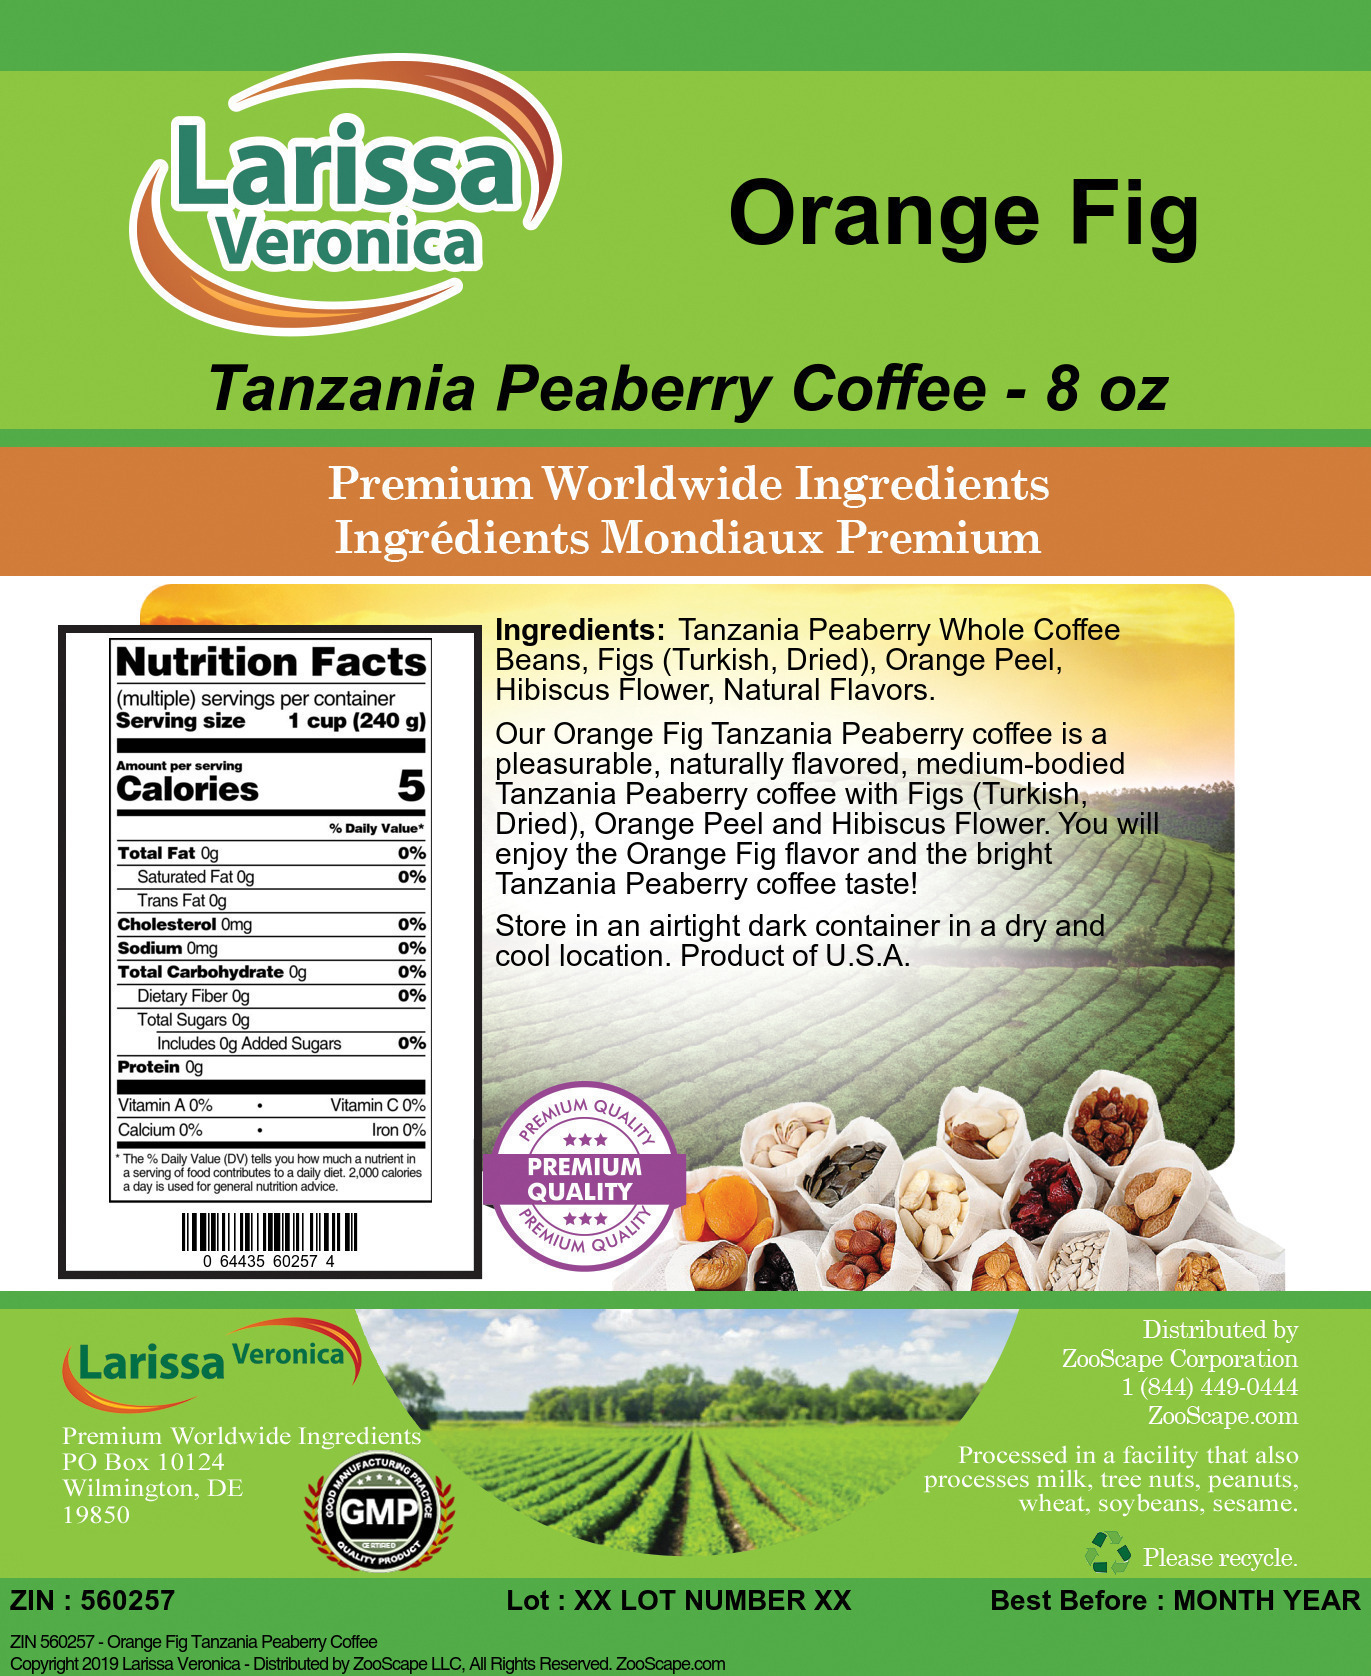 Orange Fig Tanzania Peaberry Coffee - Label